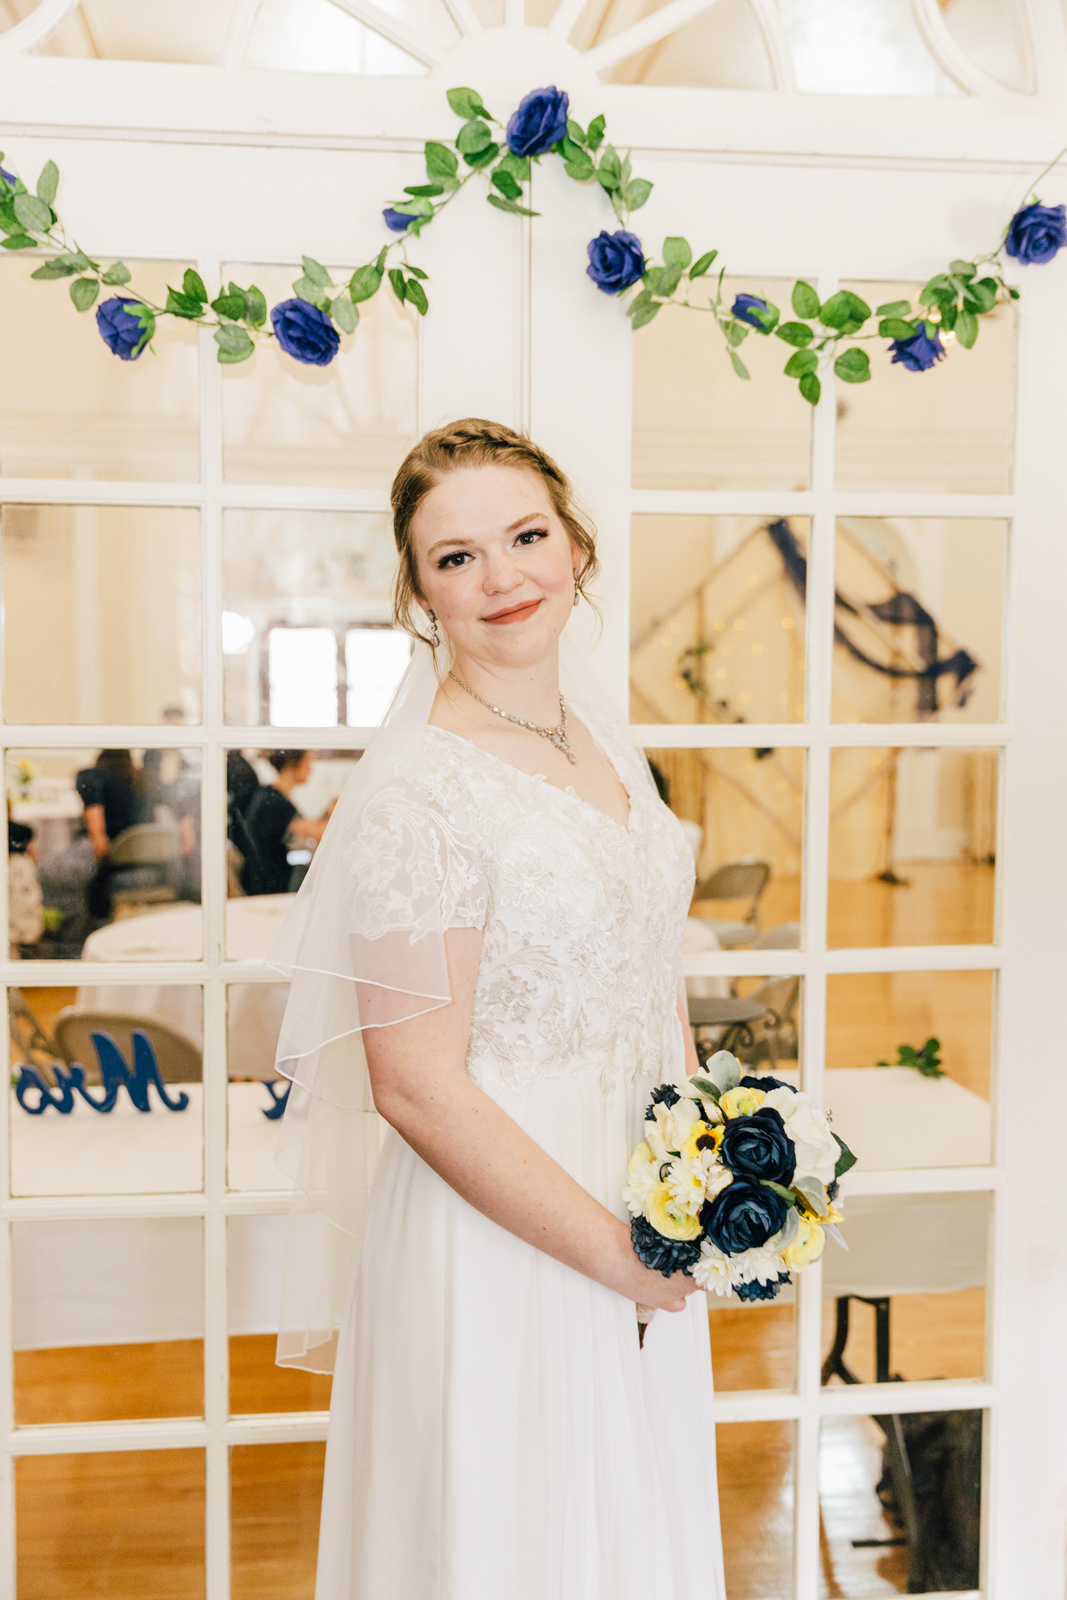 Jackson Hole wedding photographers capture bride standing by venue windows